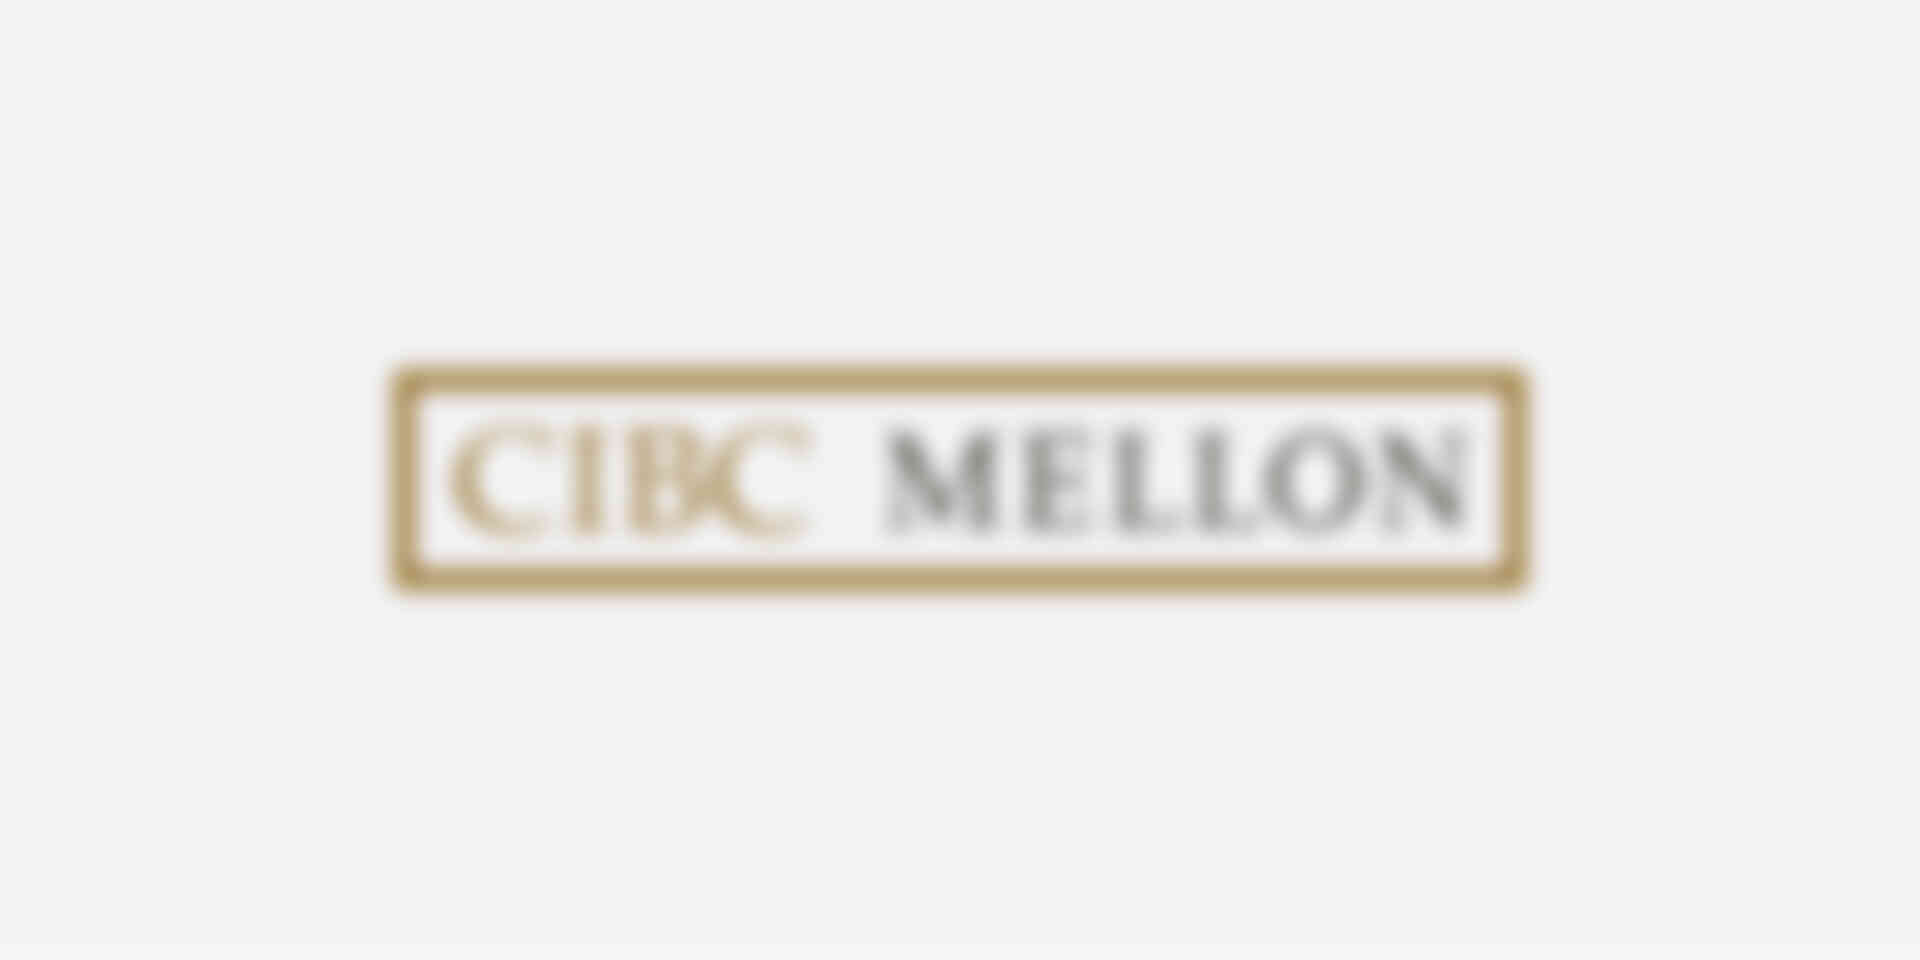 Our clients - financial-insurance-cibc-mellon